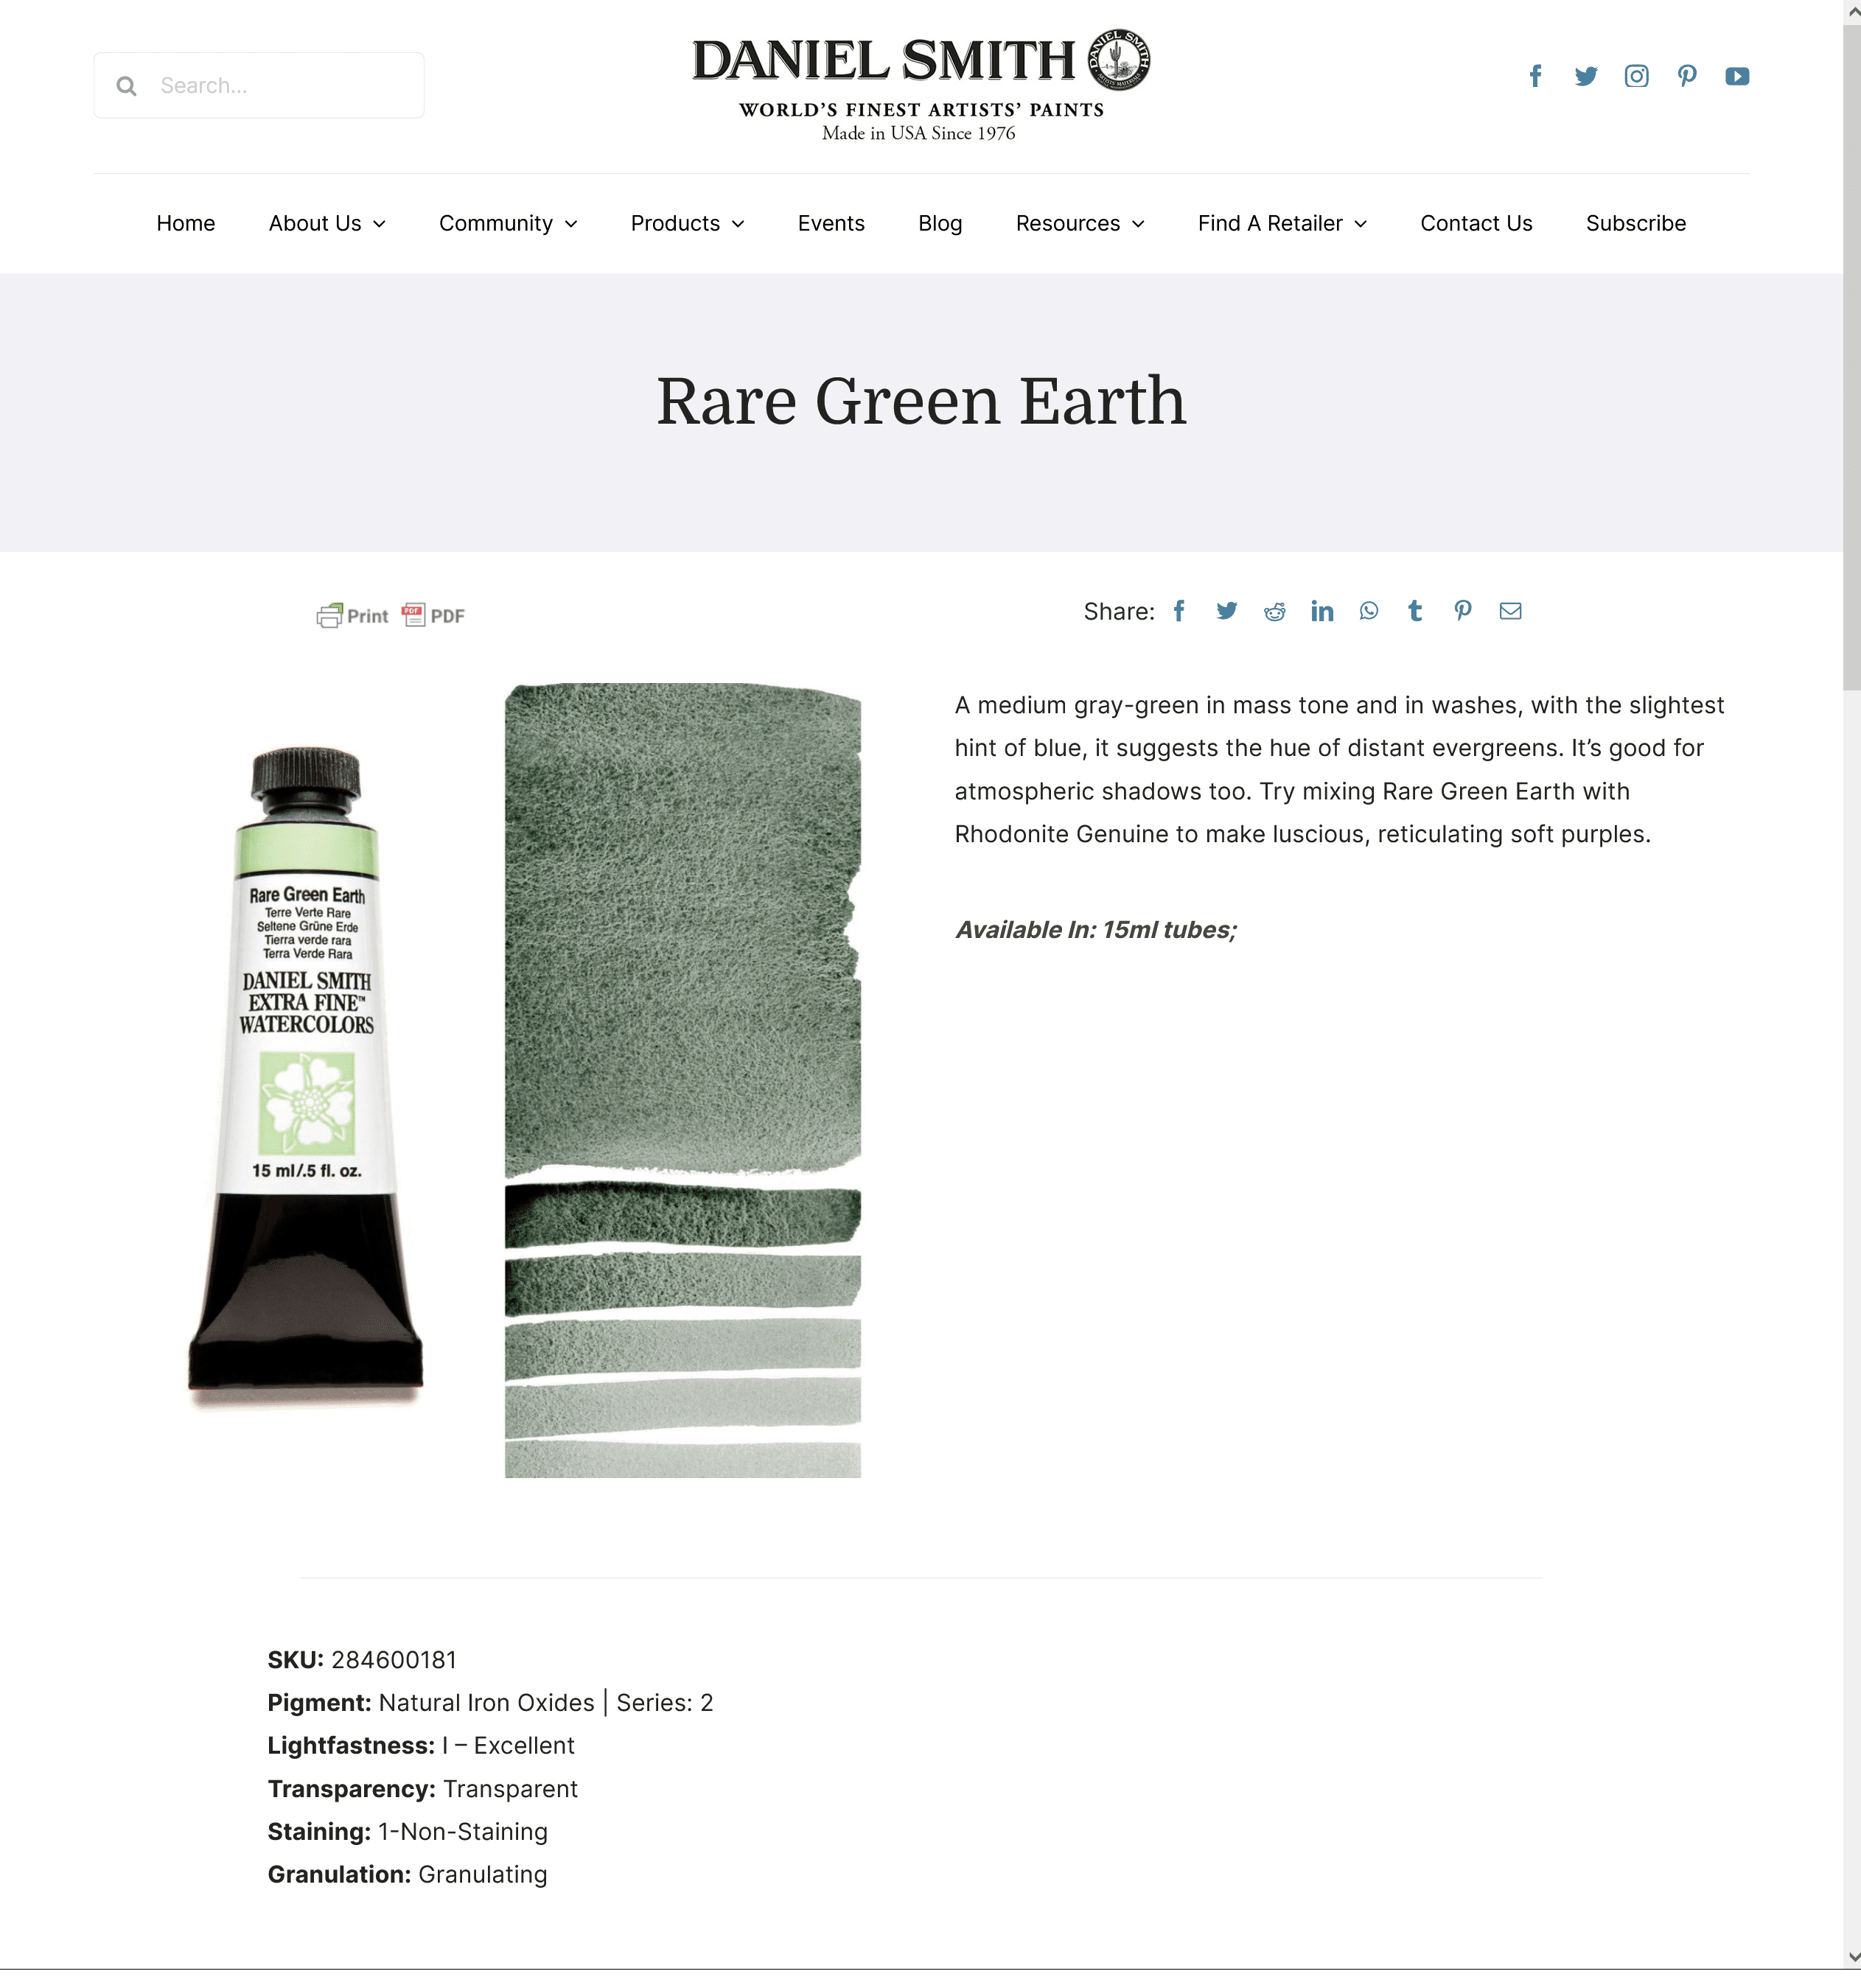 Rare green Earth